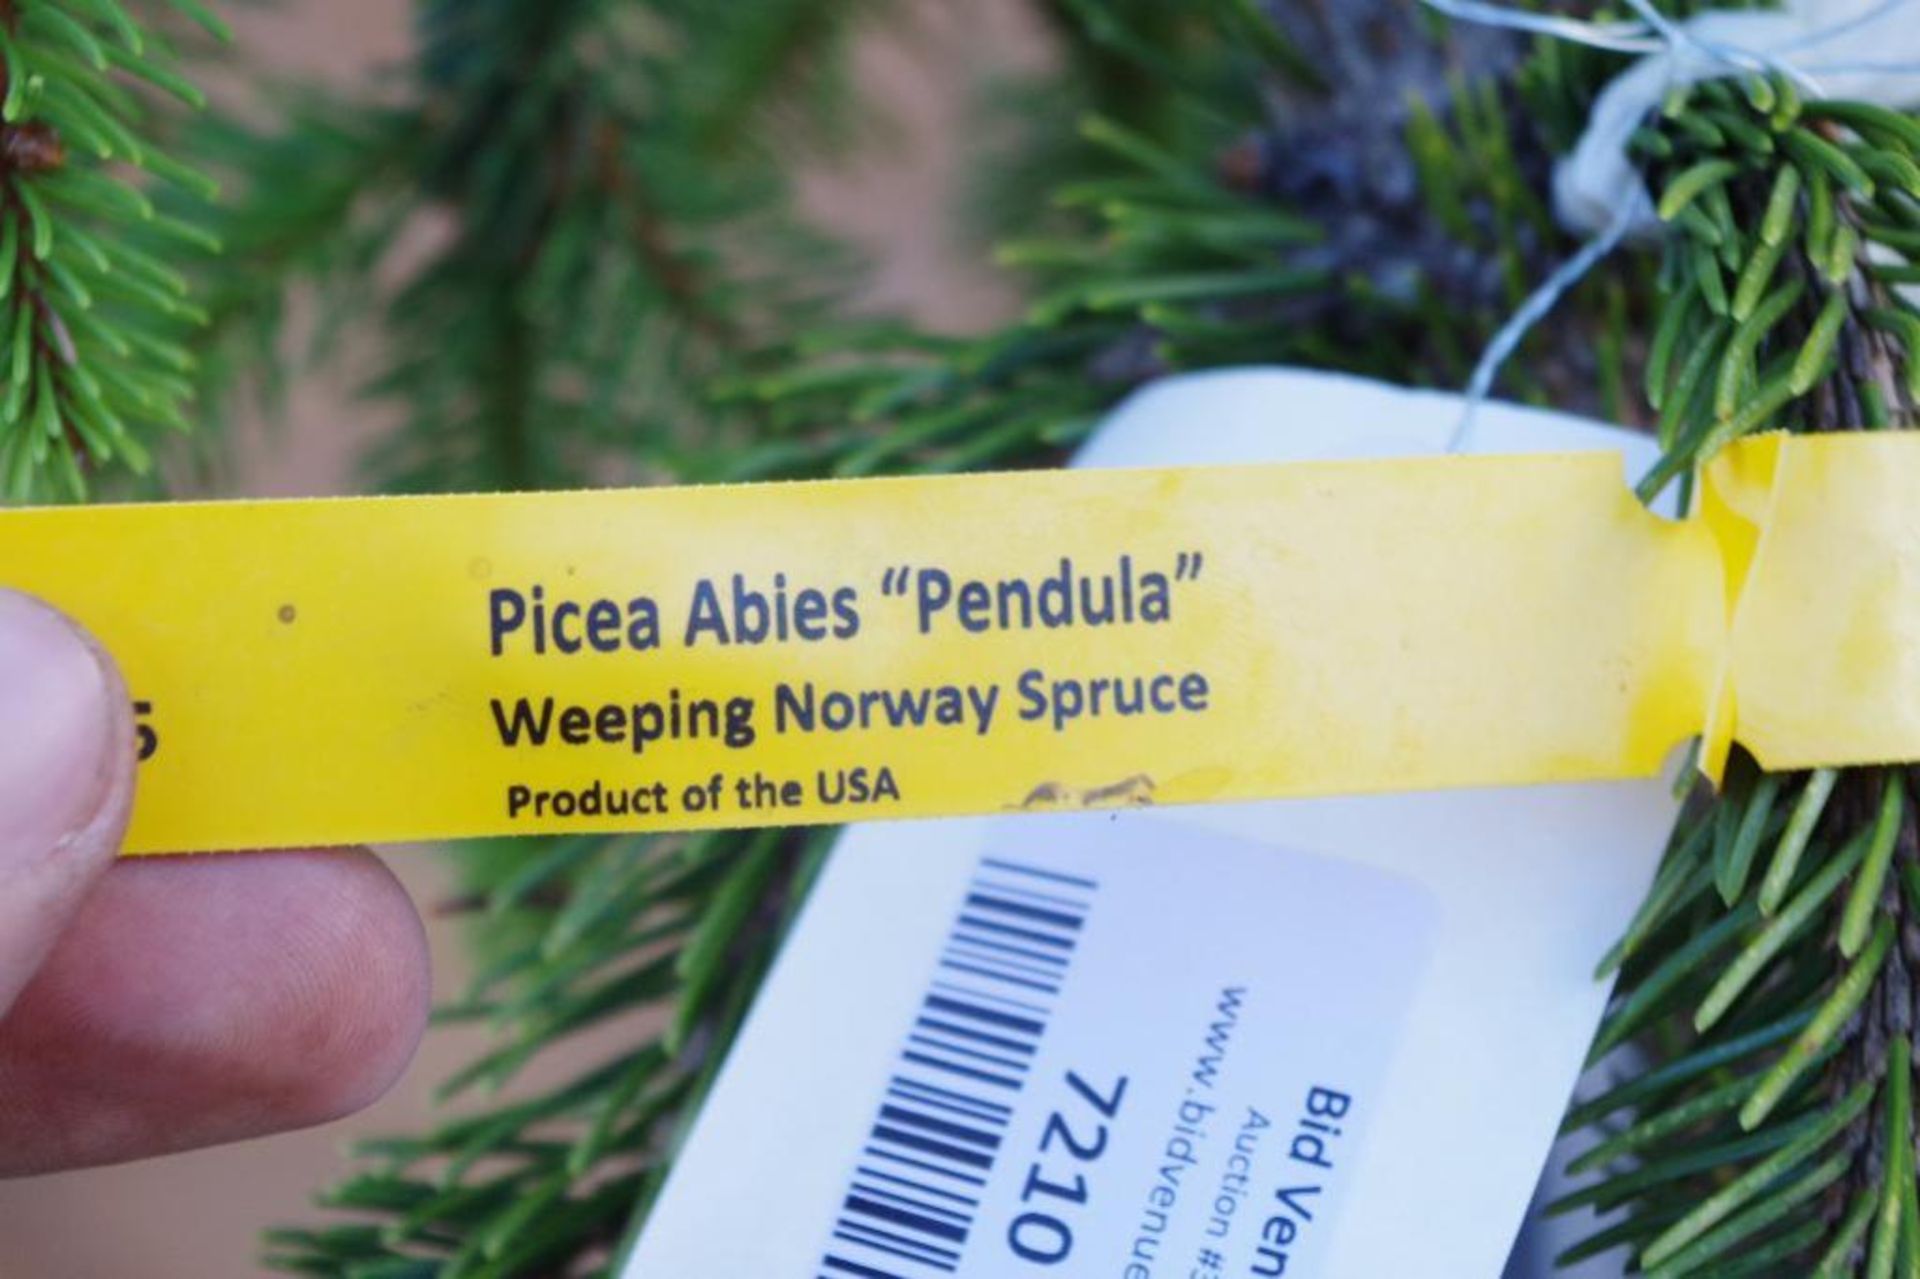 Premium PICEA ABIES Pendula Weeping Norway Spruce, 74"H - Image 2 of 3